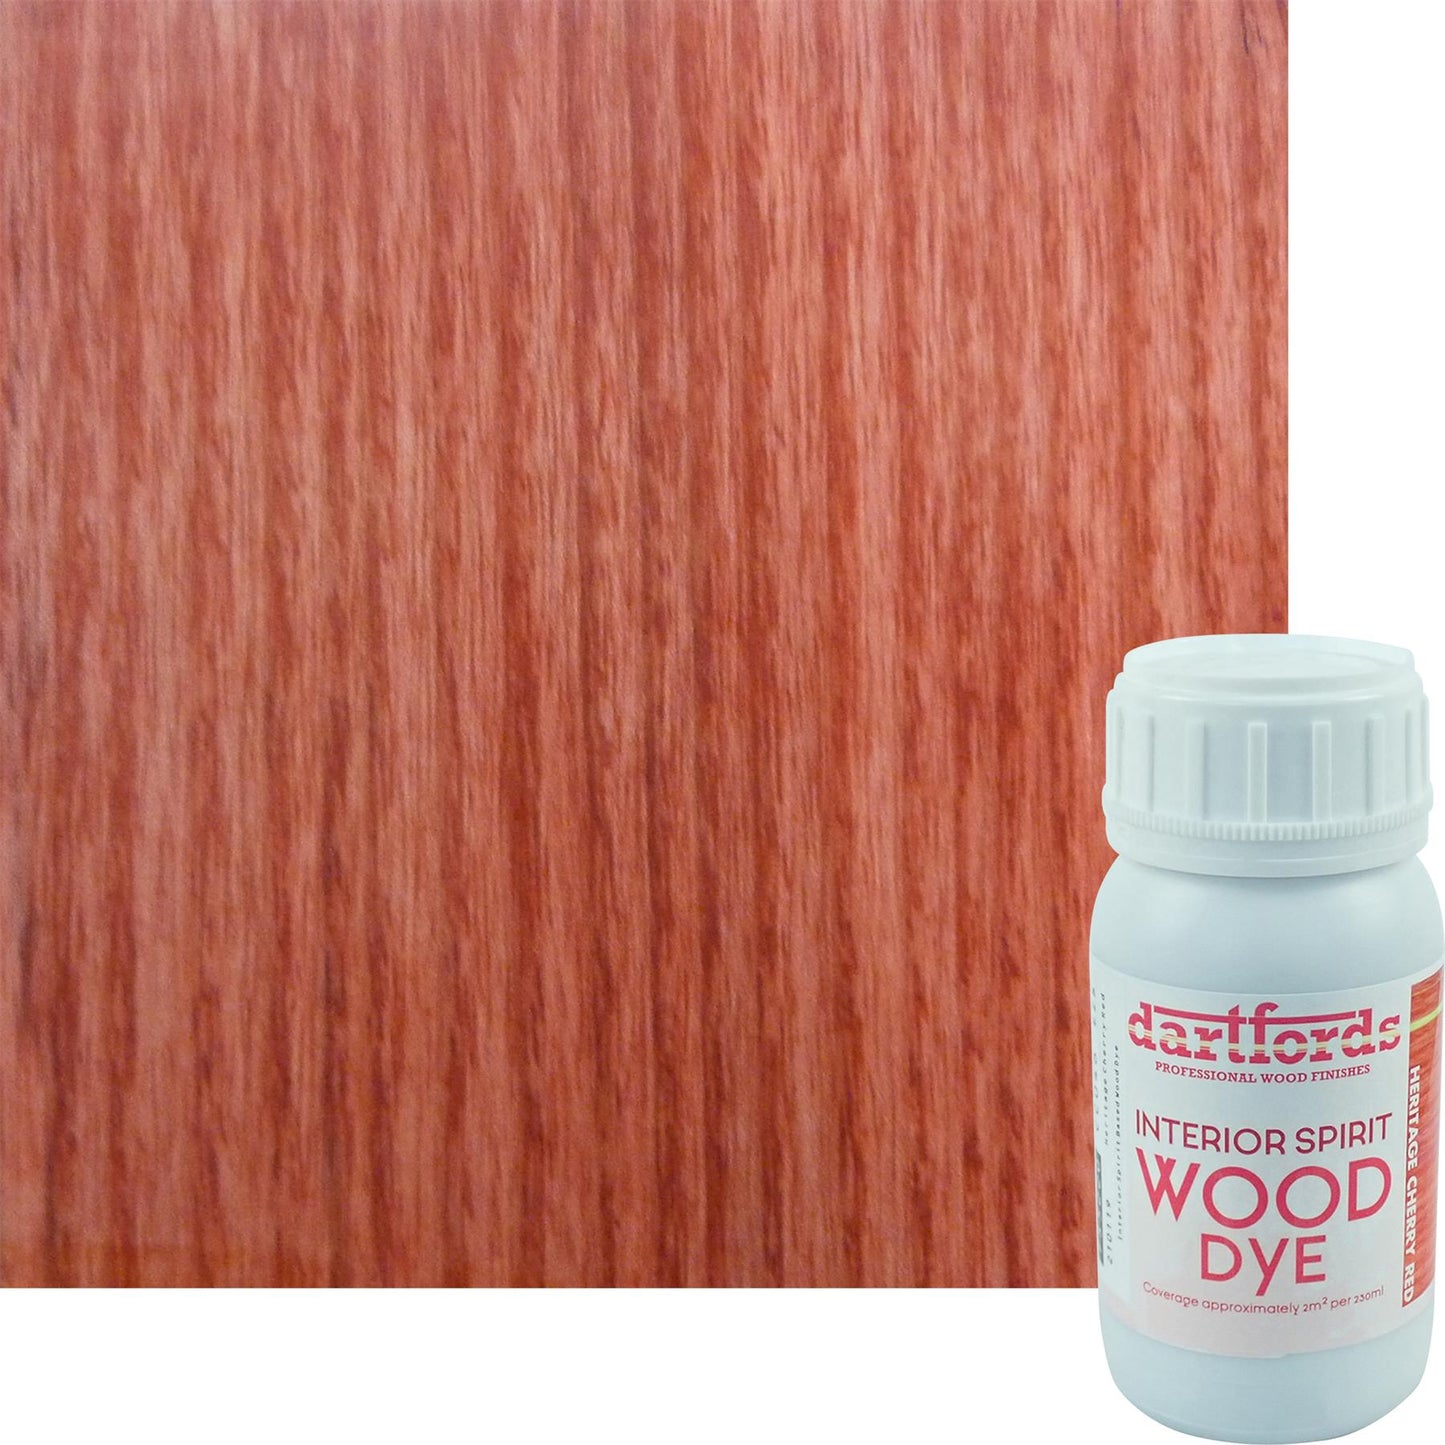 dartfords Heritage Cherry Red Interior Spirit Based Wood Dye - 230ml Tin